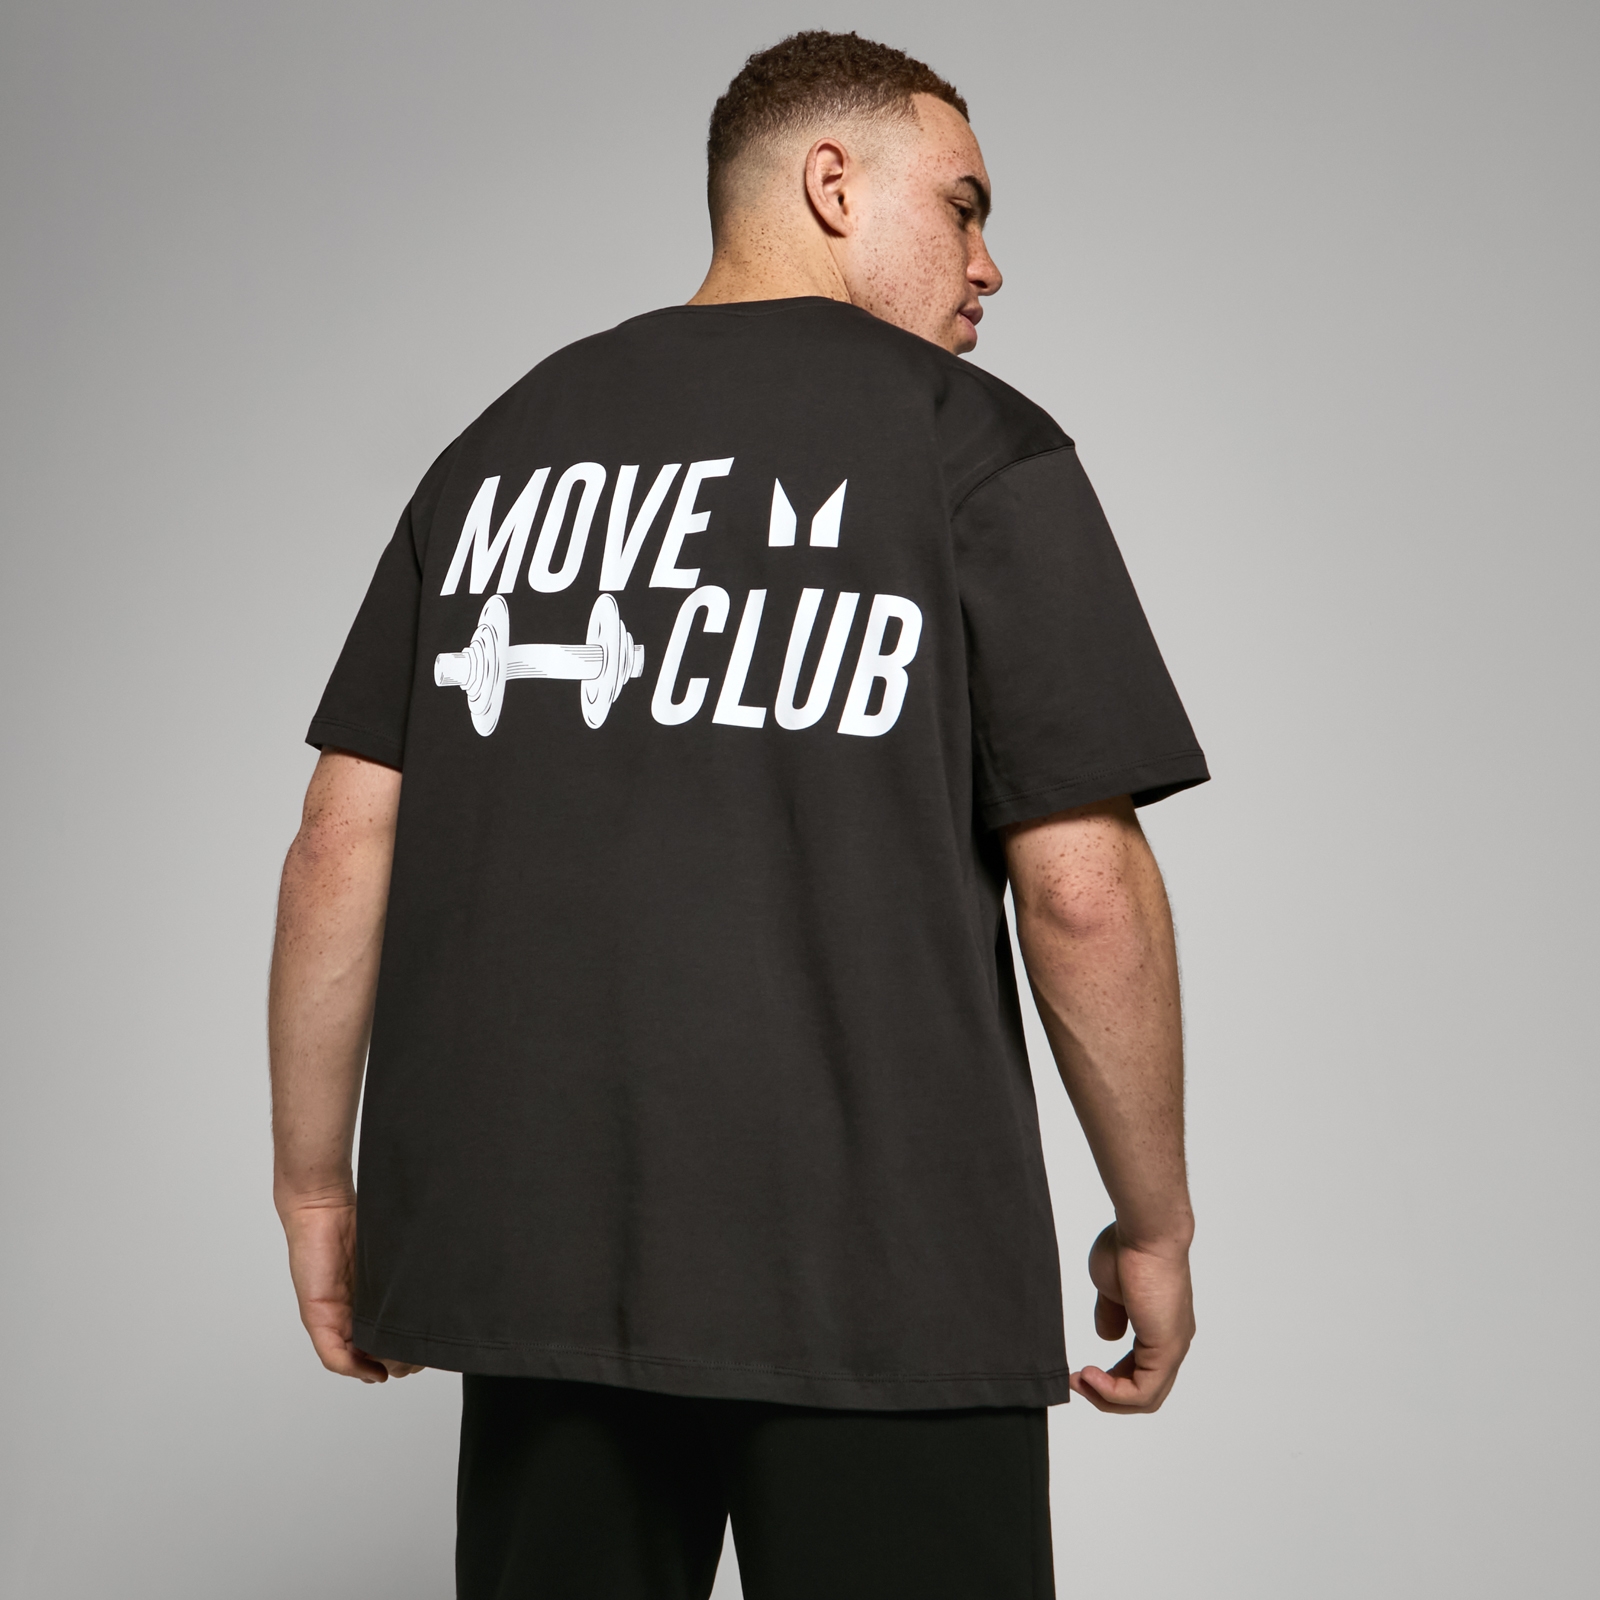 Camiseta extragrande Move Club de MP - Negro lavado - XXS - XS